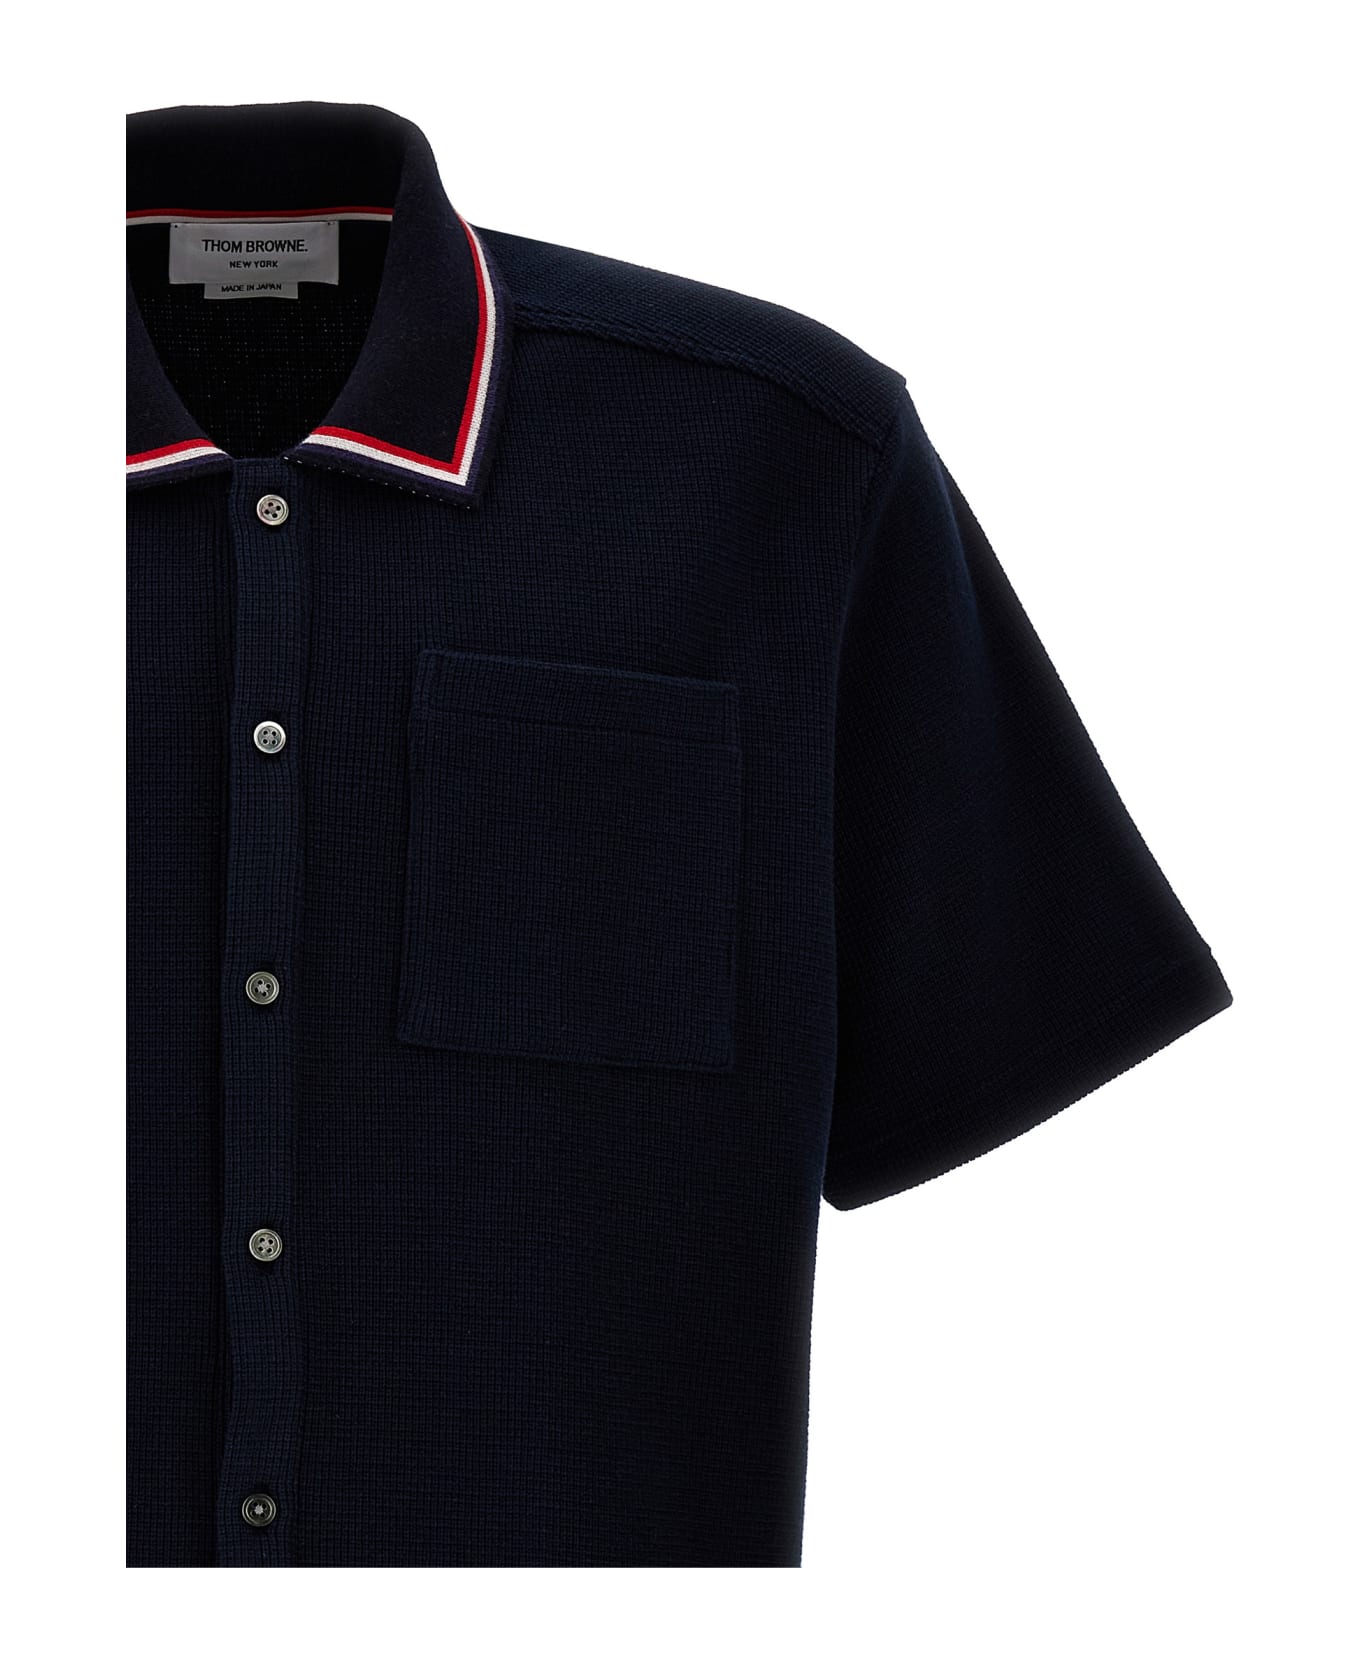 Thom Browne Cotton Knit Shirt - NAVY シャツ